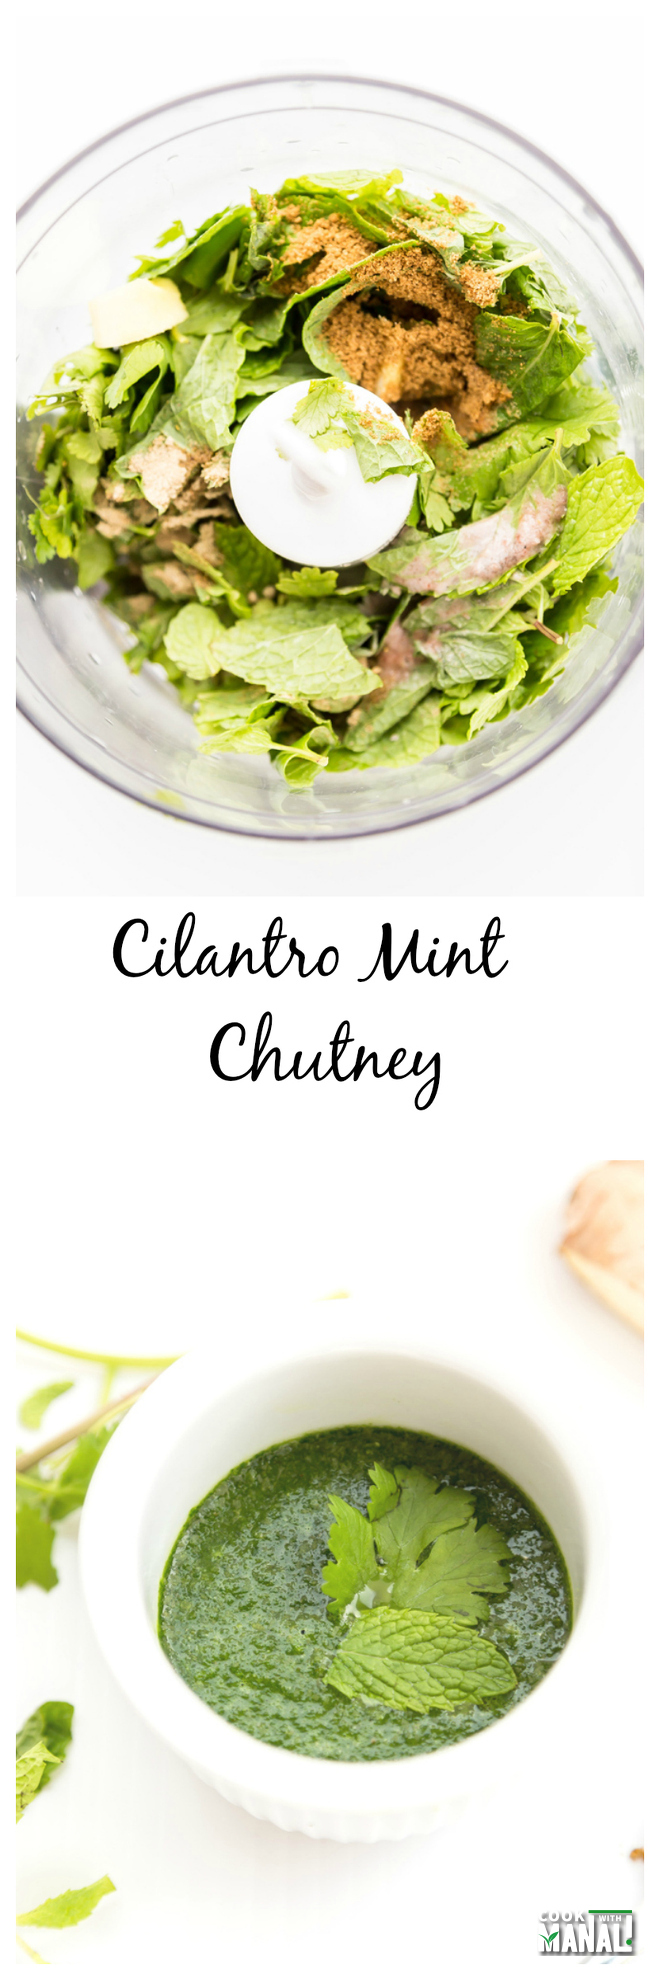 Cilantro Mint Chutney Collage